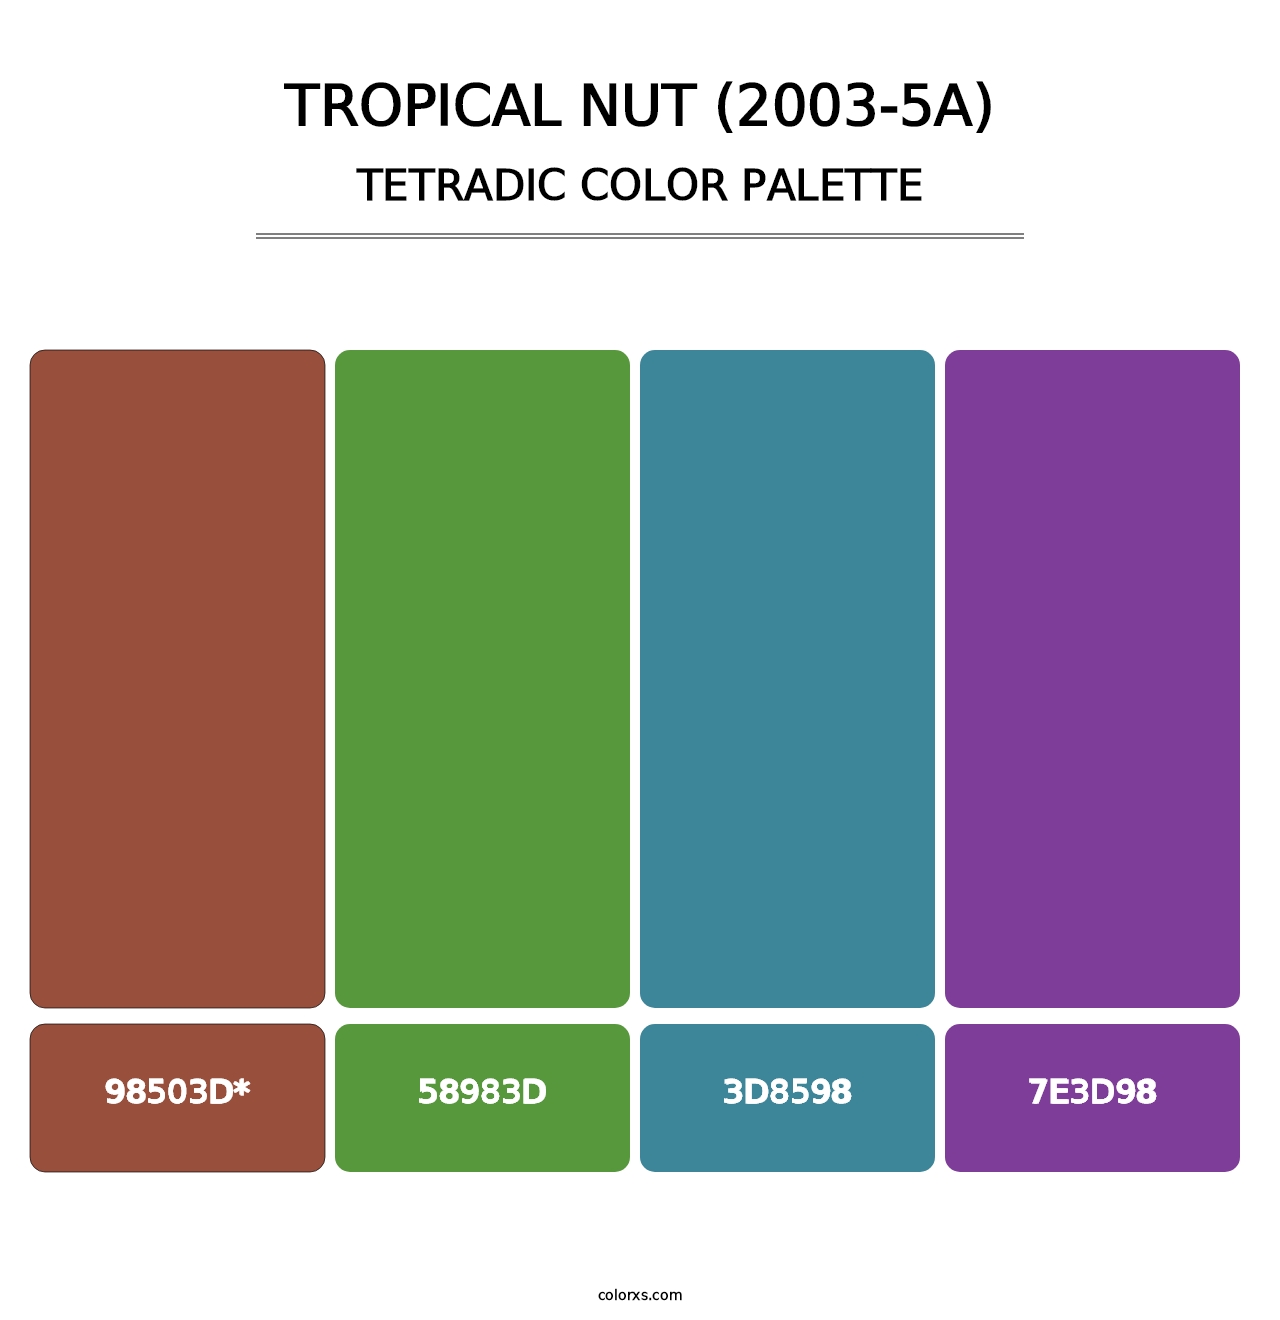 Tropical Nut (2003-5A) - Tetradic Color Palette